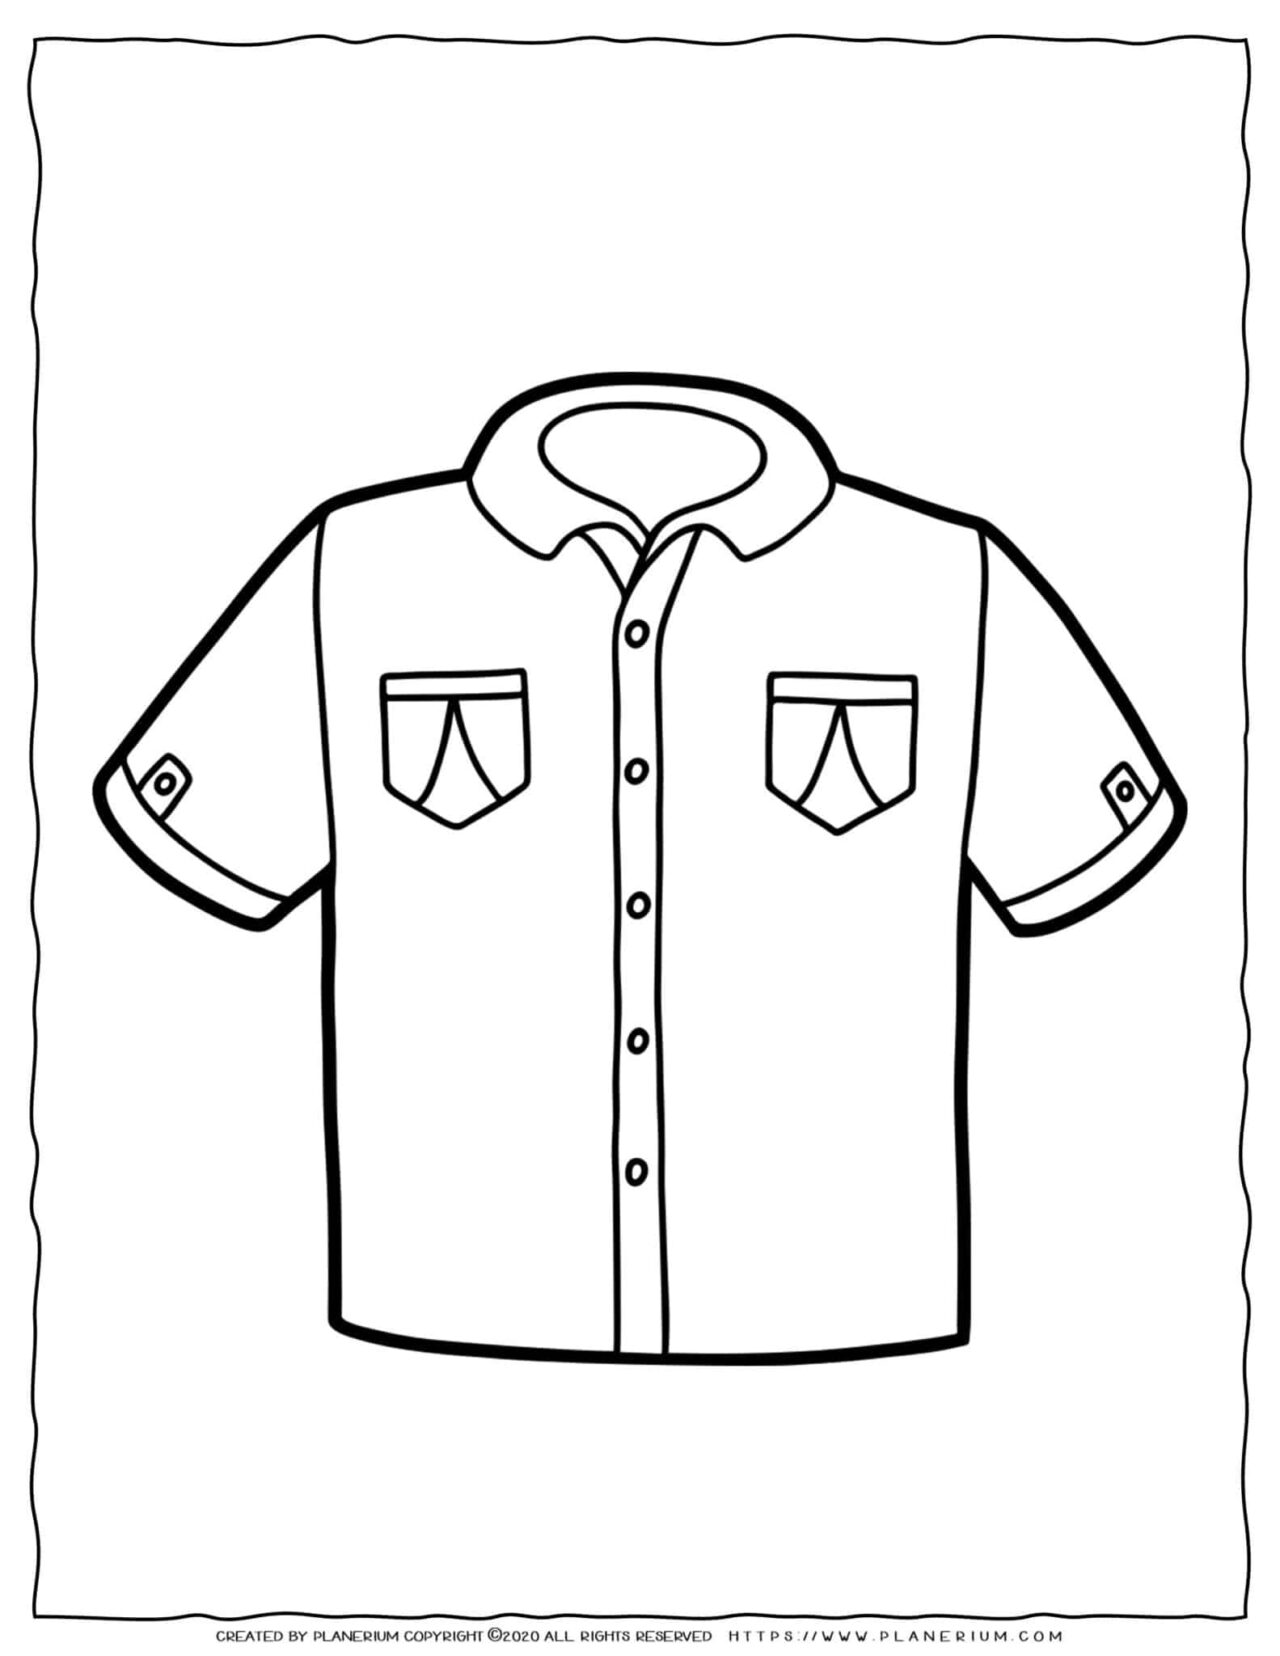 Clothes Coloring Page - A Boy Short-Sleeve Shirt | Planerium